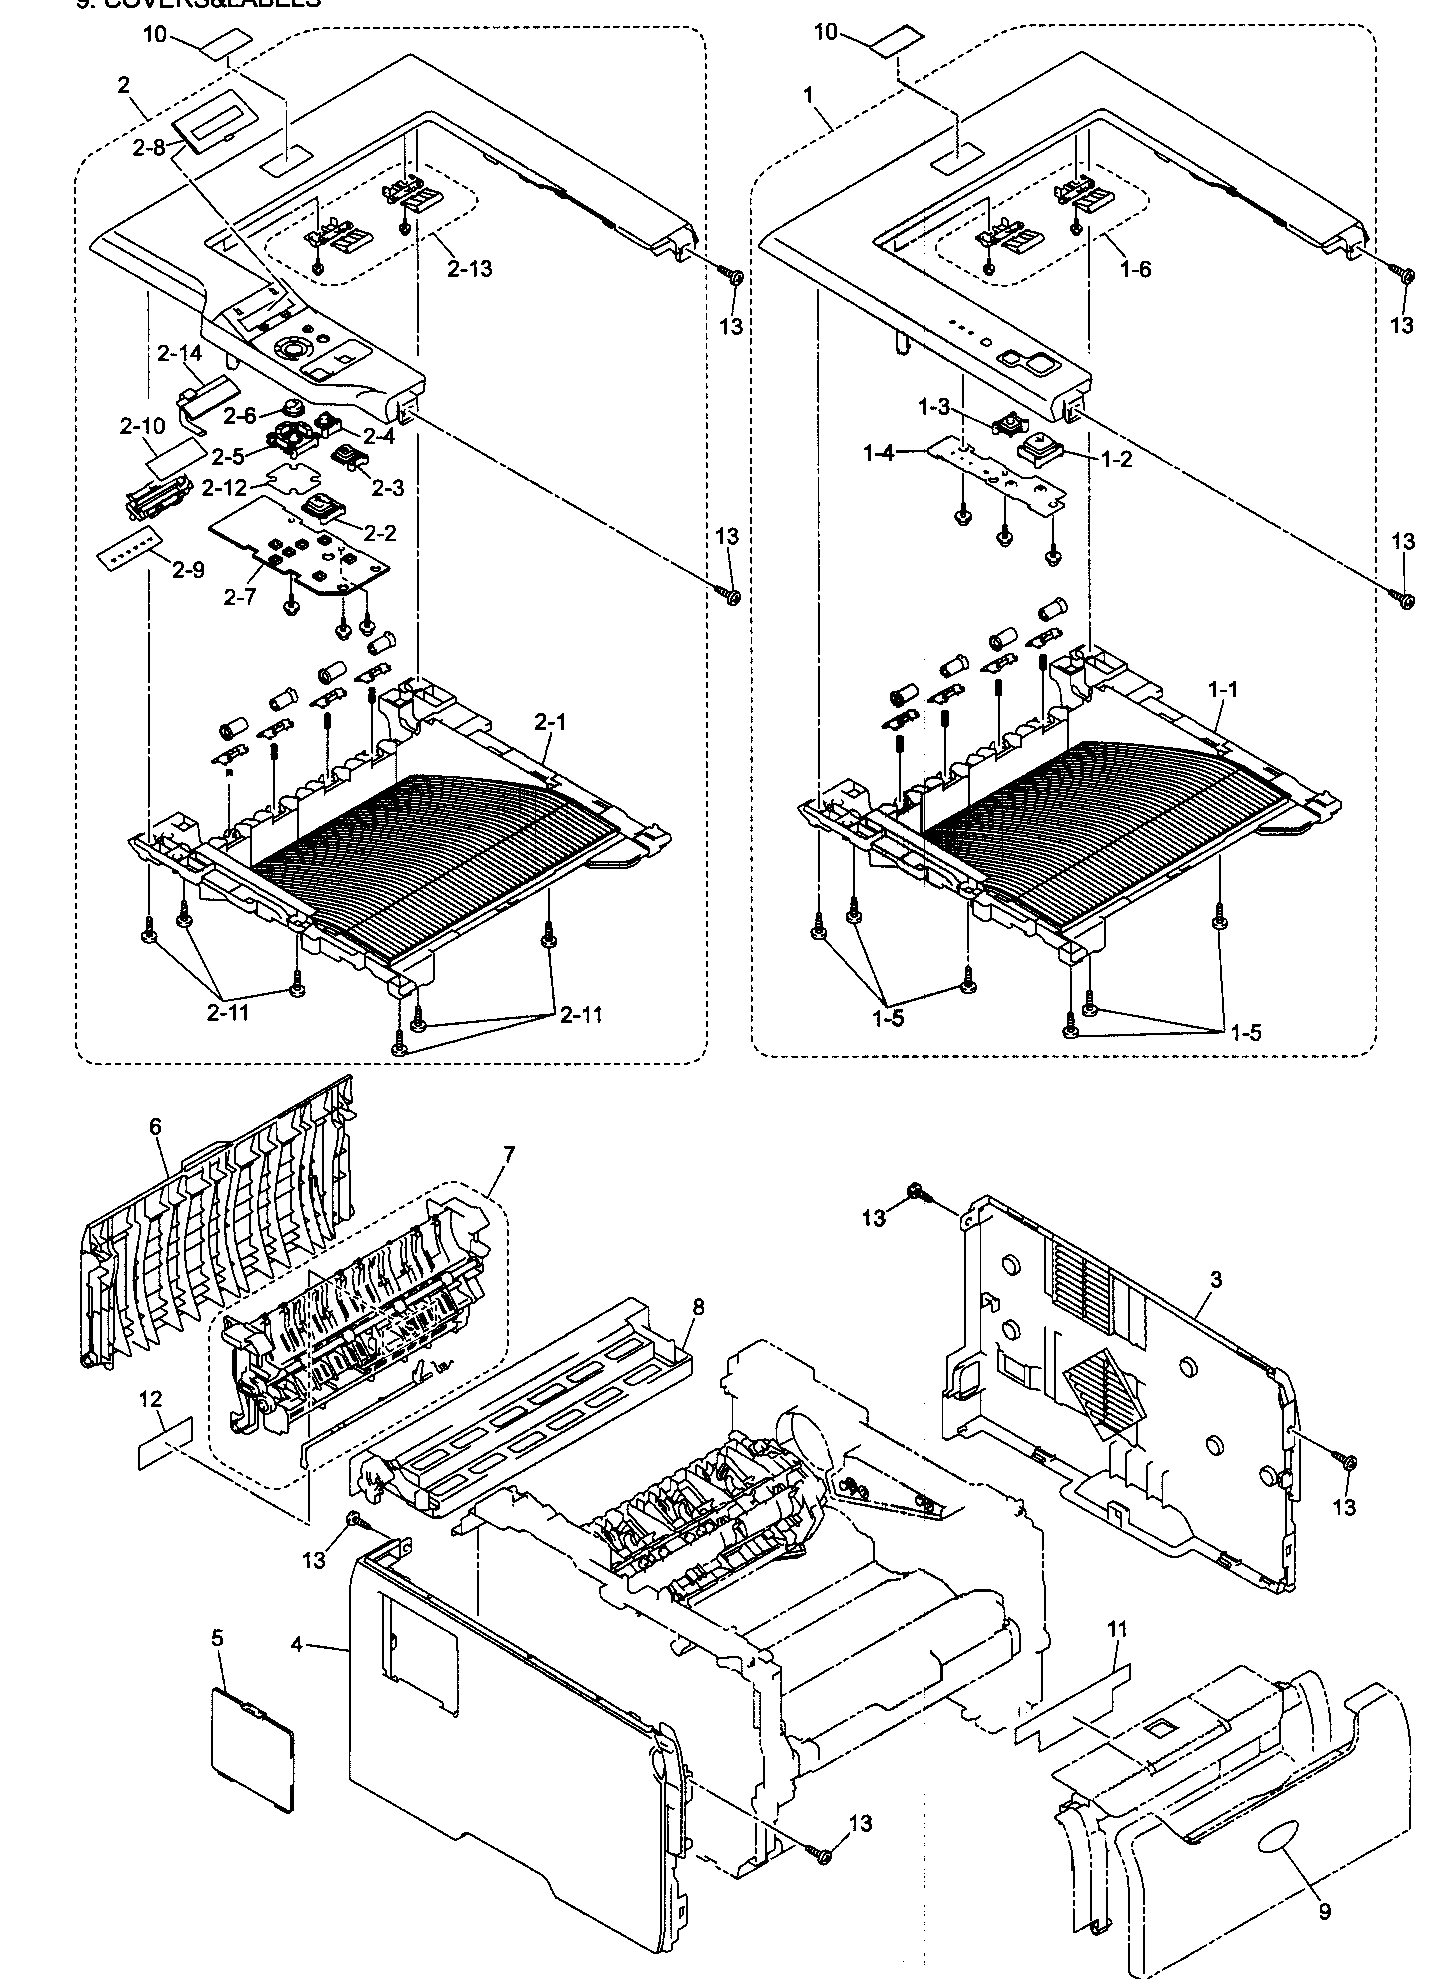 Brother Se350 Parts Diagram